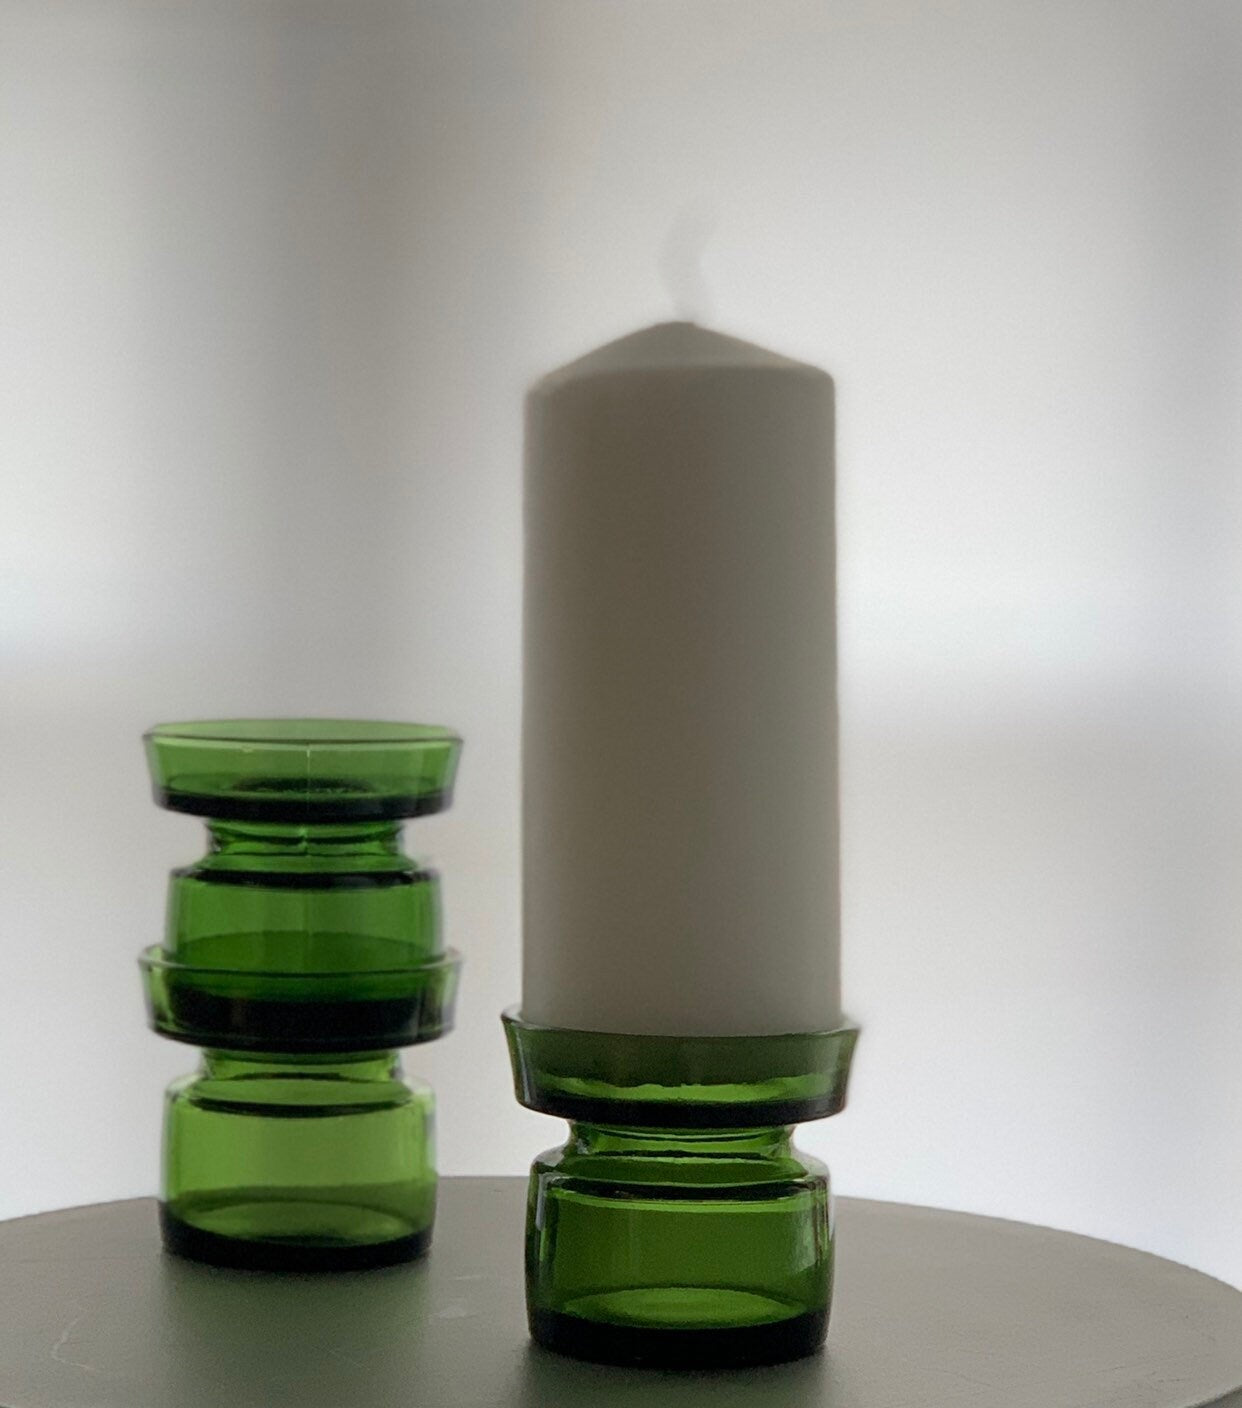 Dansk Design Waxed Filled Candleholder, designed by Jens Harald Quistgaard in the 1960s Green Glass Vintage